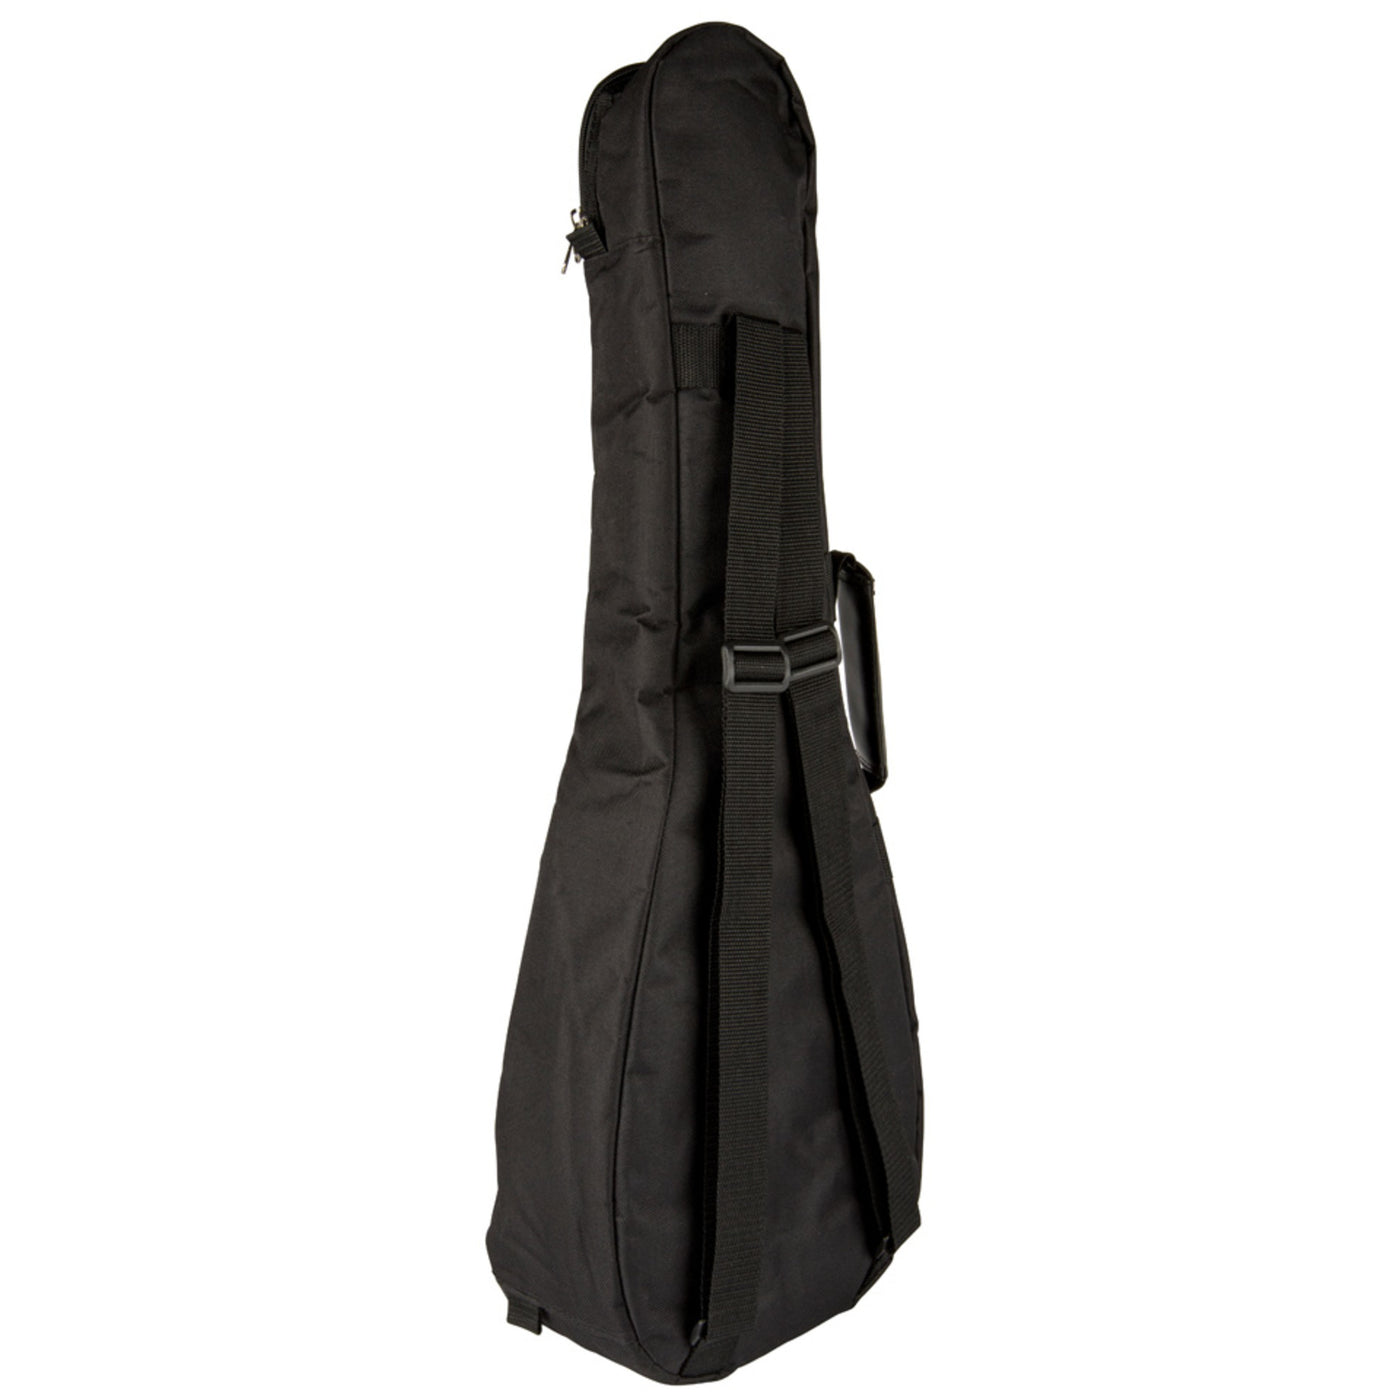 Lanikai Ukulele Bag, Durable Black Nylon Exterior with Padded Interior, Tenor